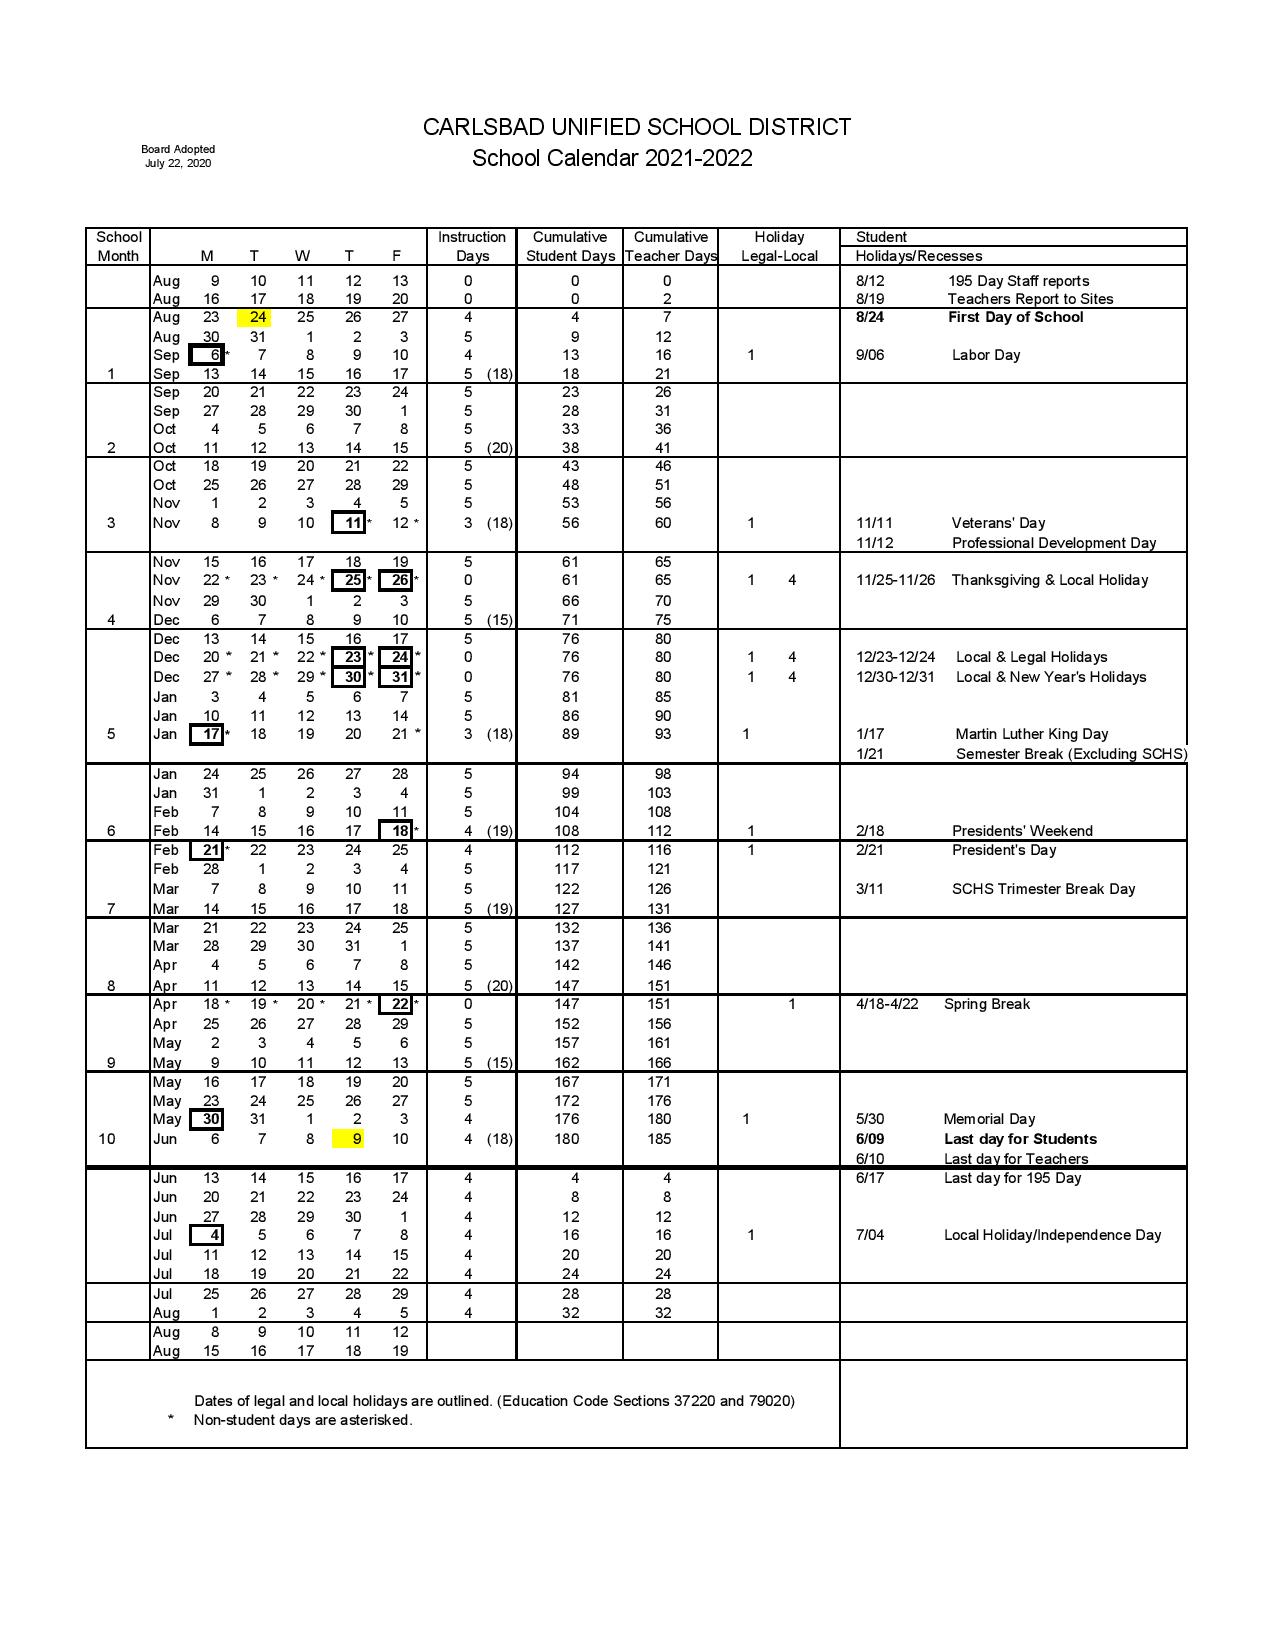 Carlsbad Unified School District Calendar 2021-2022